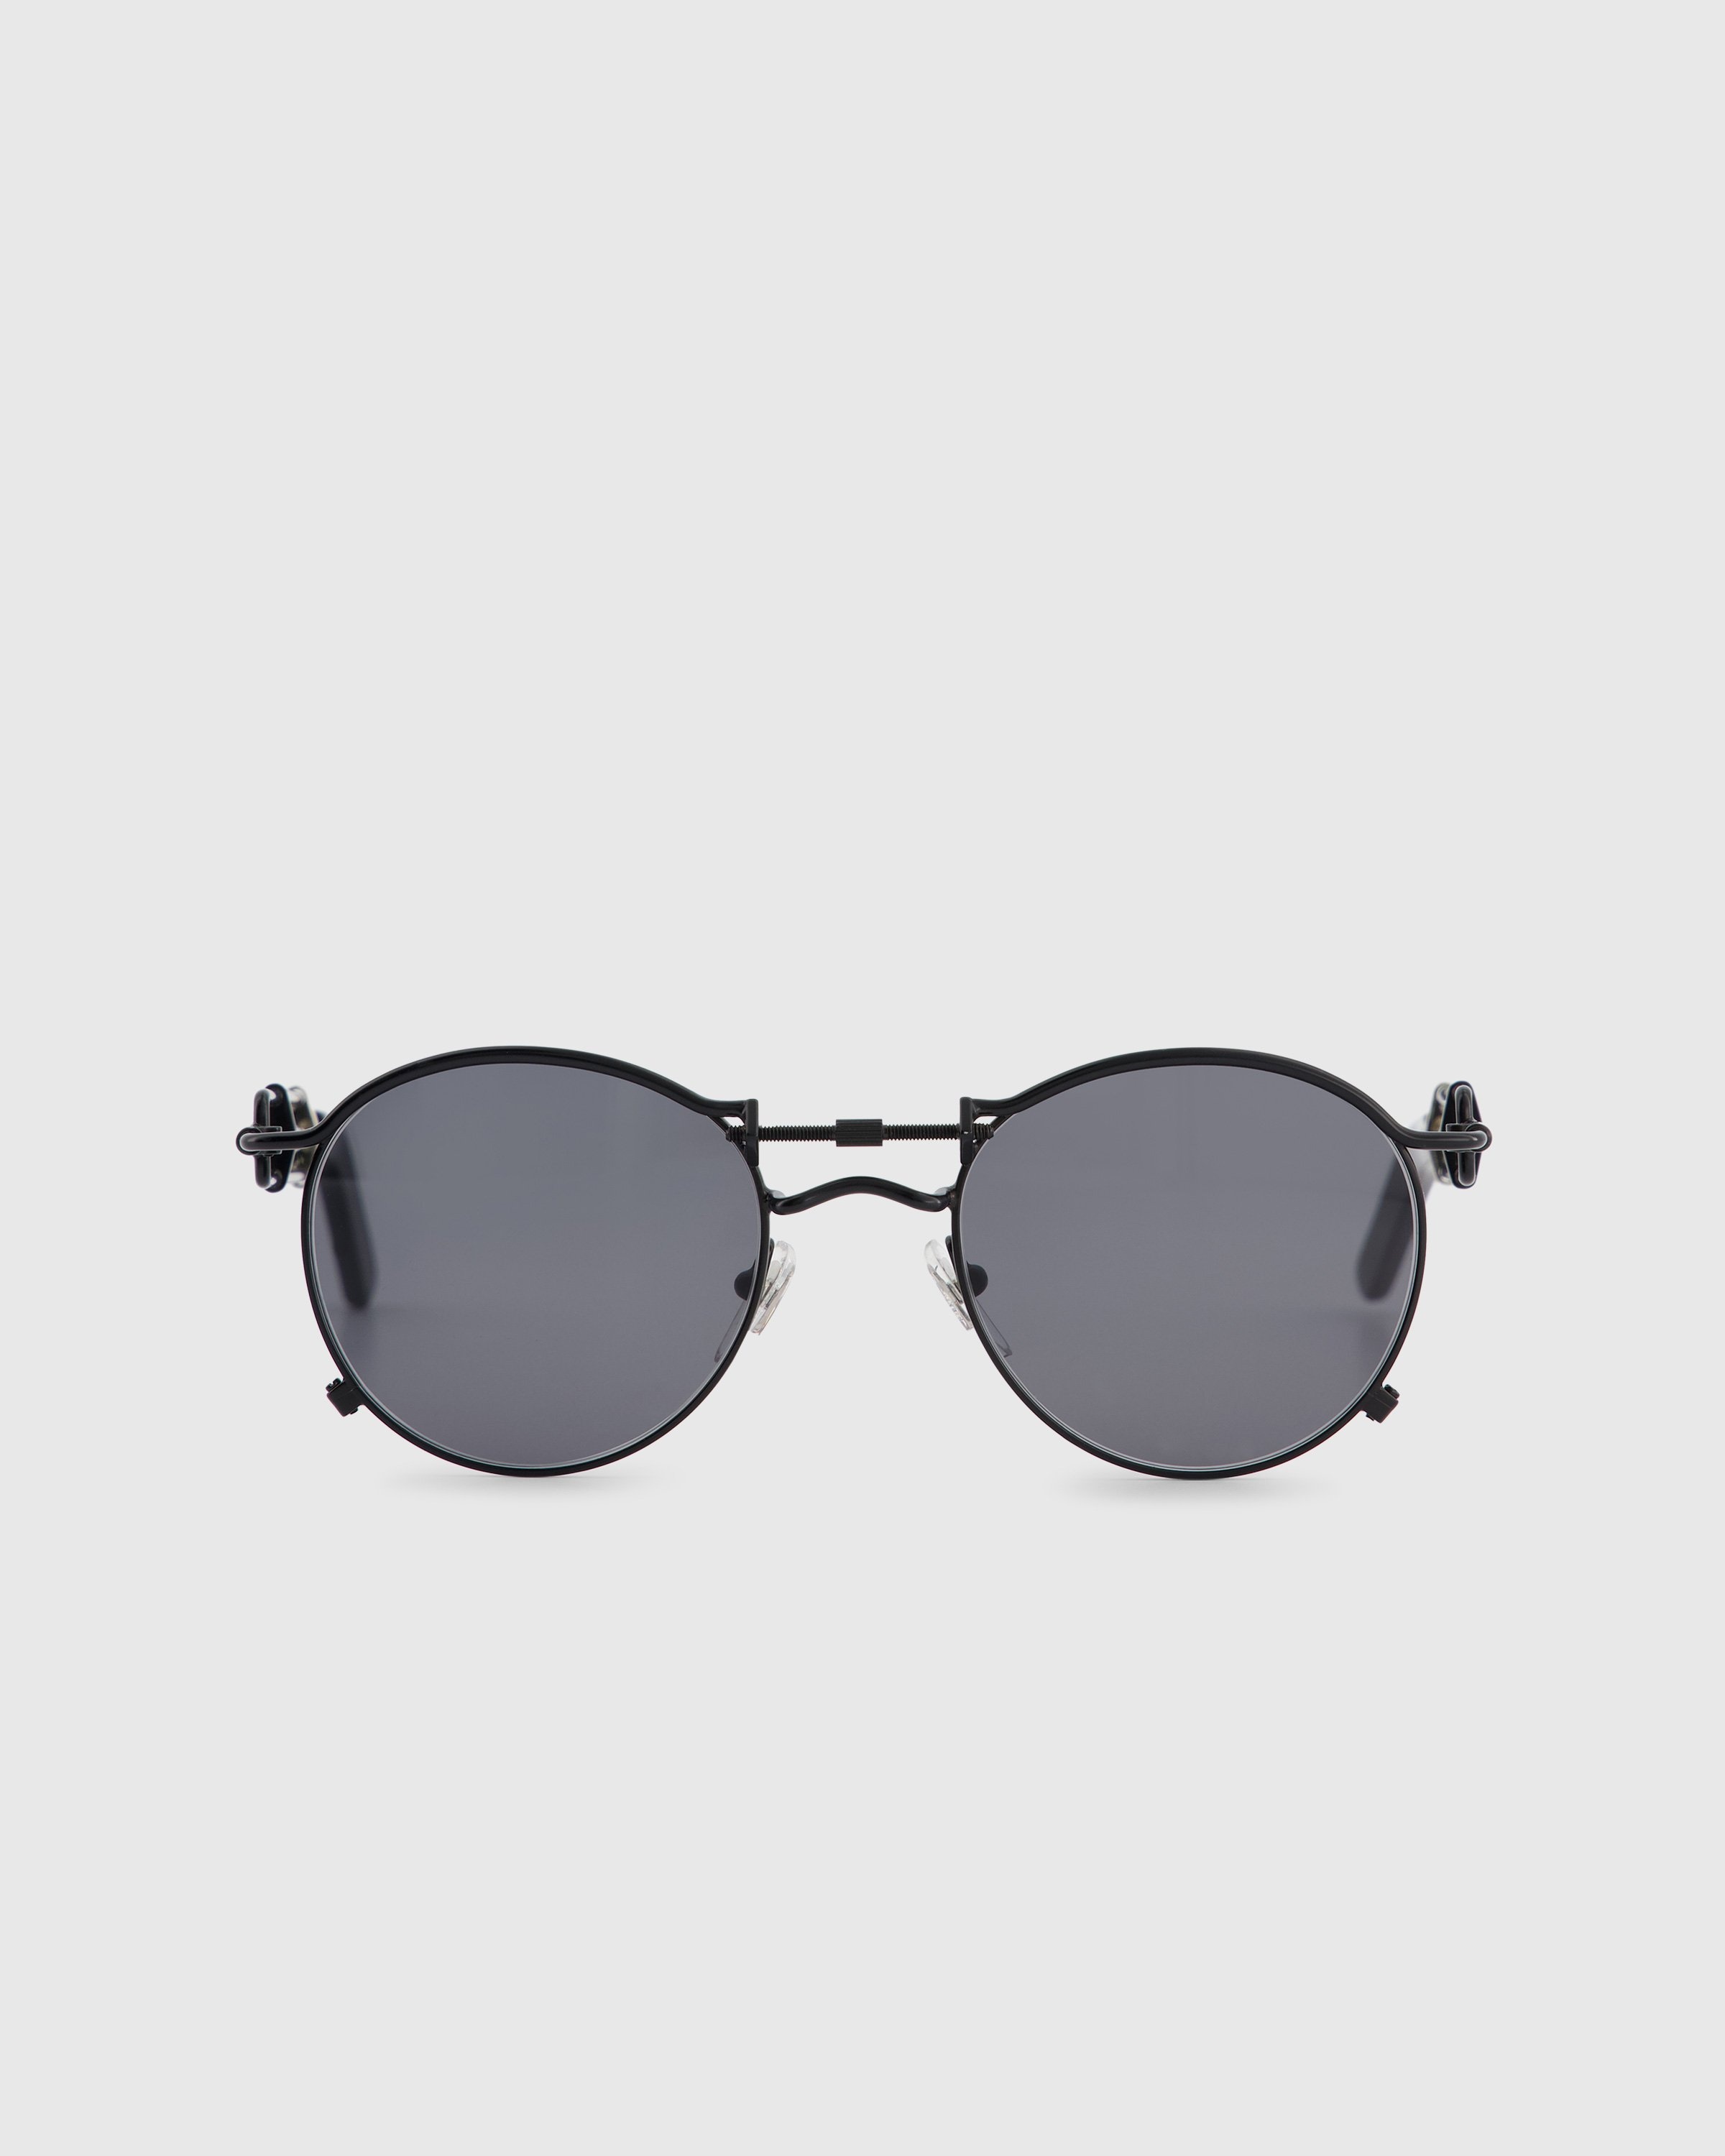 Jean Paul Gaultier x Burna Boy – 56-0174 Pas De Vis Sunglasses Black - Sunglasses - Black - Image 1